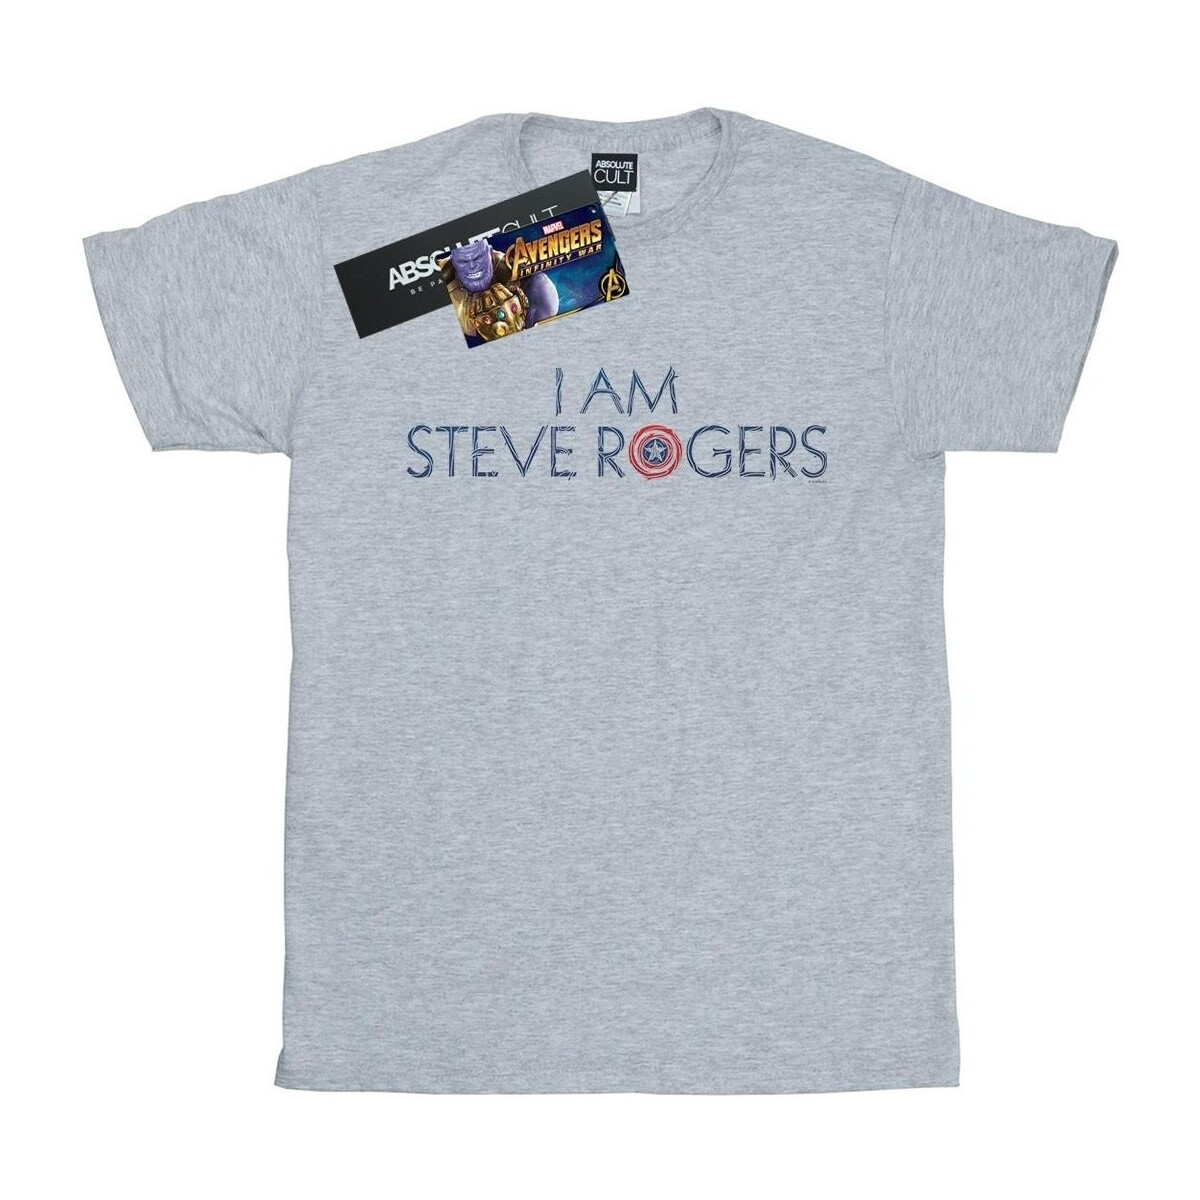 textil Niña Camisetas manga larga Marvel Avengers Infinity War I Am Steve Rogers Gris